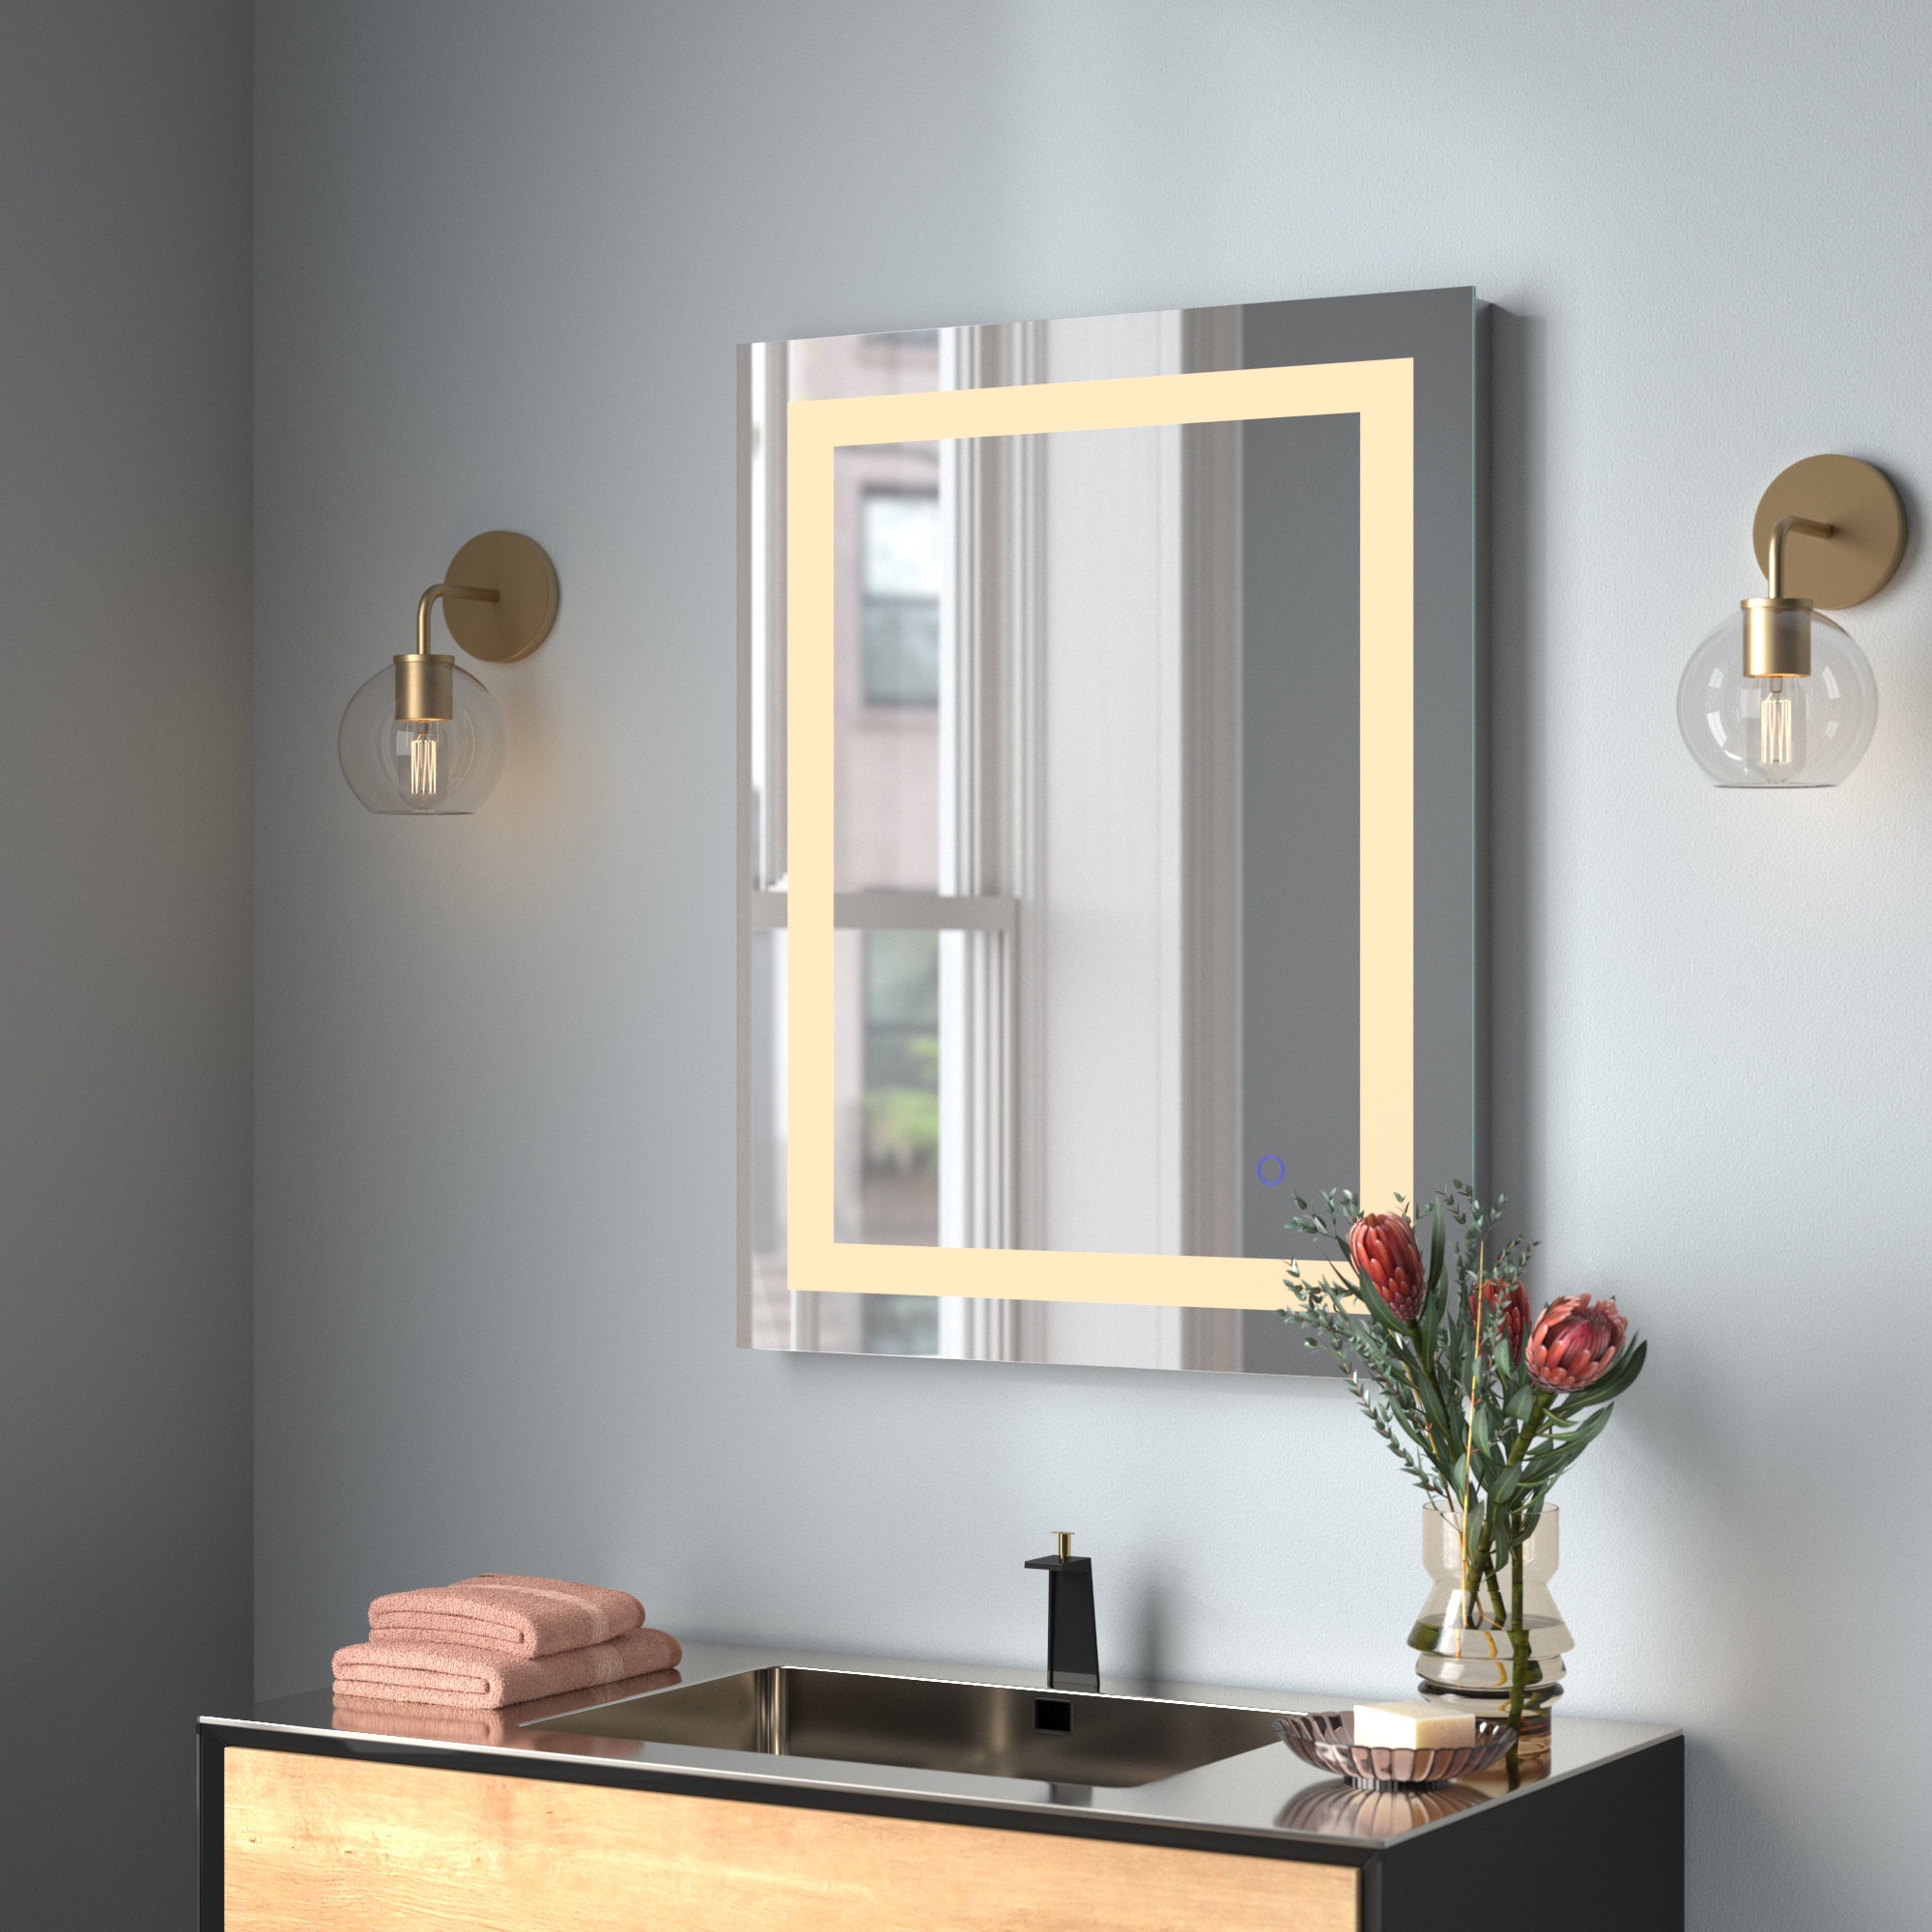 https://visualhunt.com/photos/23/scoles-led-wall-mirror.jpg